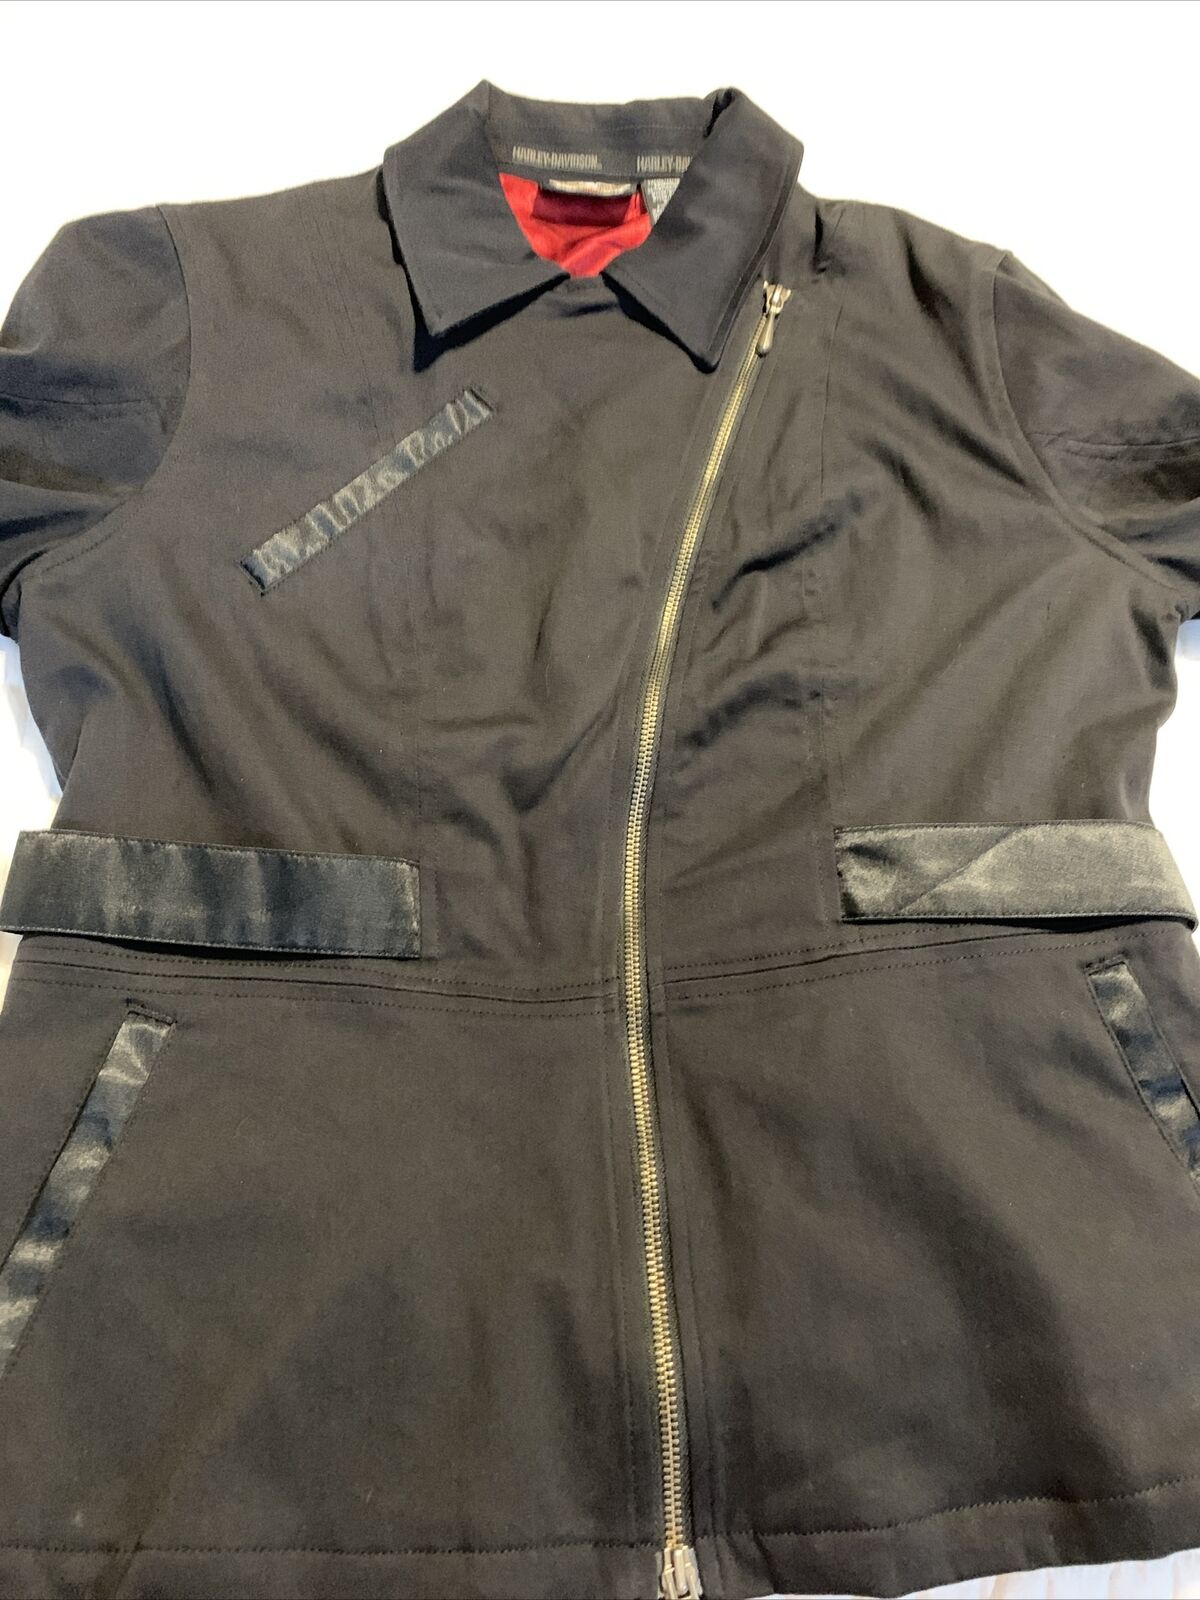 Harley Davidson Women’s Black Jacket 103819 Full Zip Size XL 